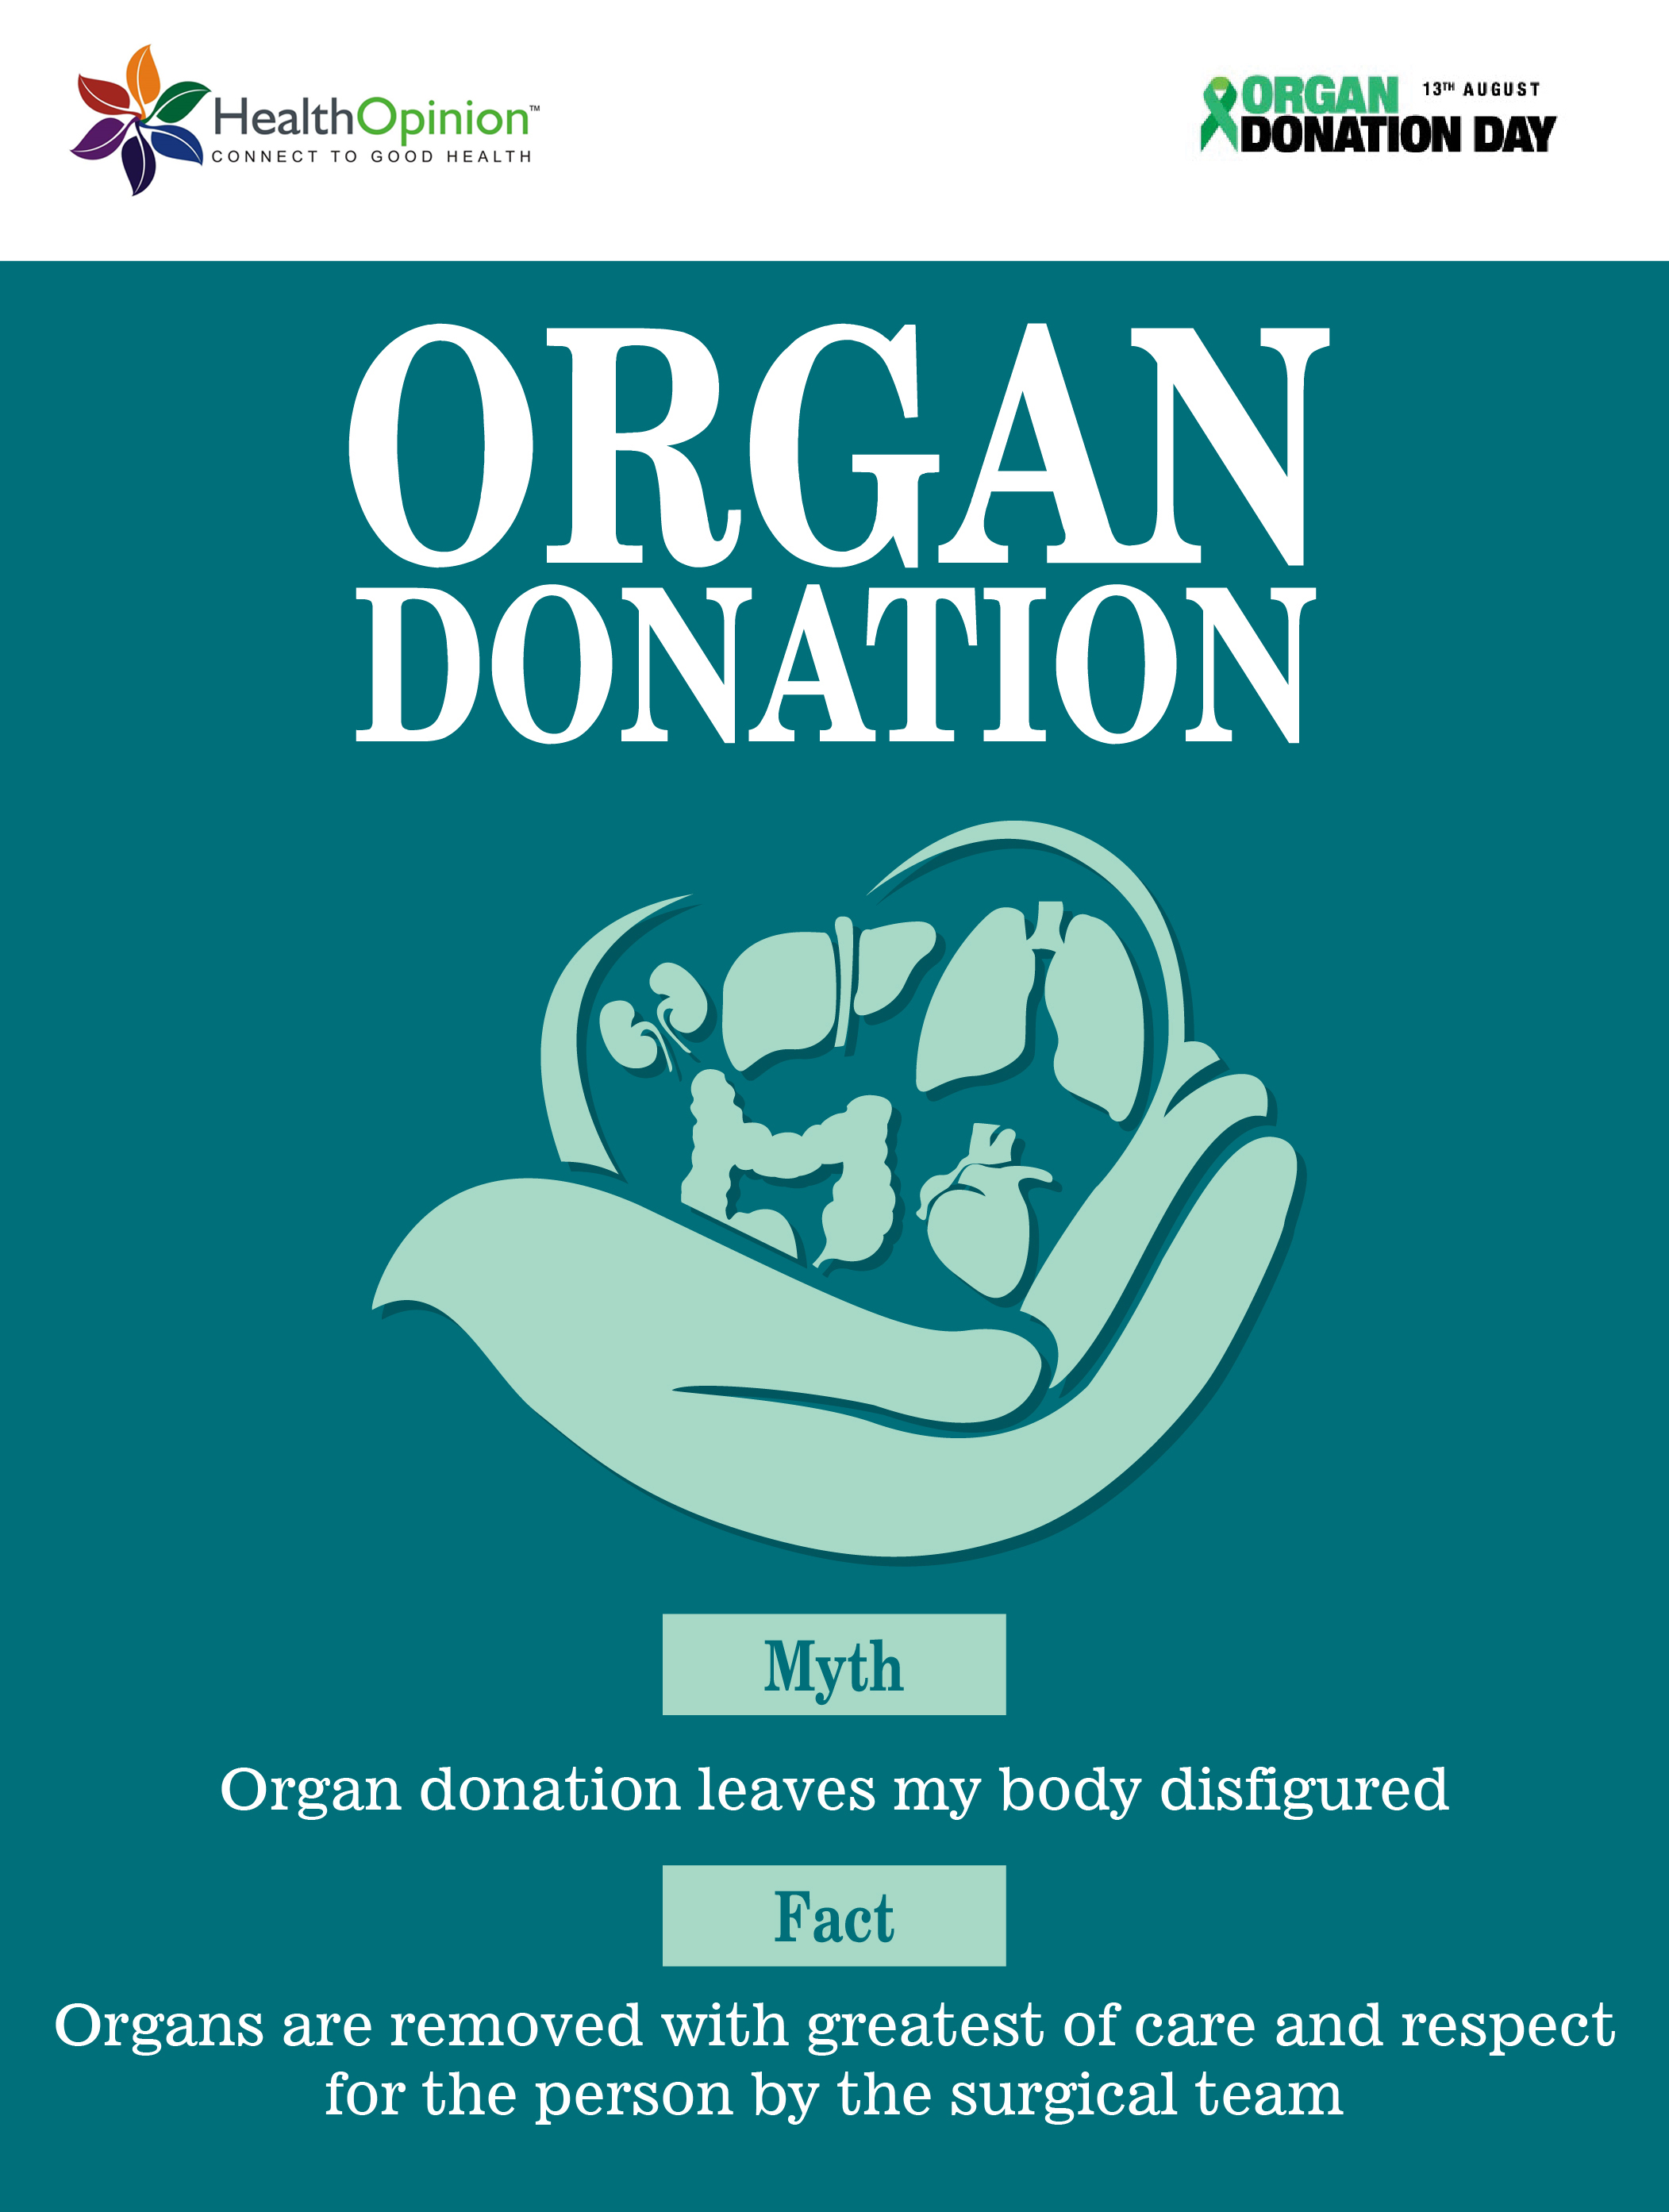 Organ donation poster image download